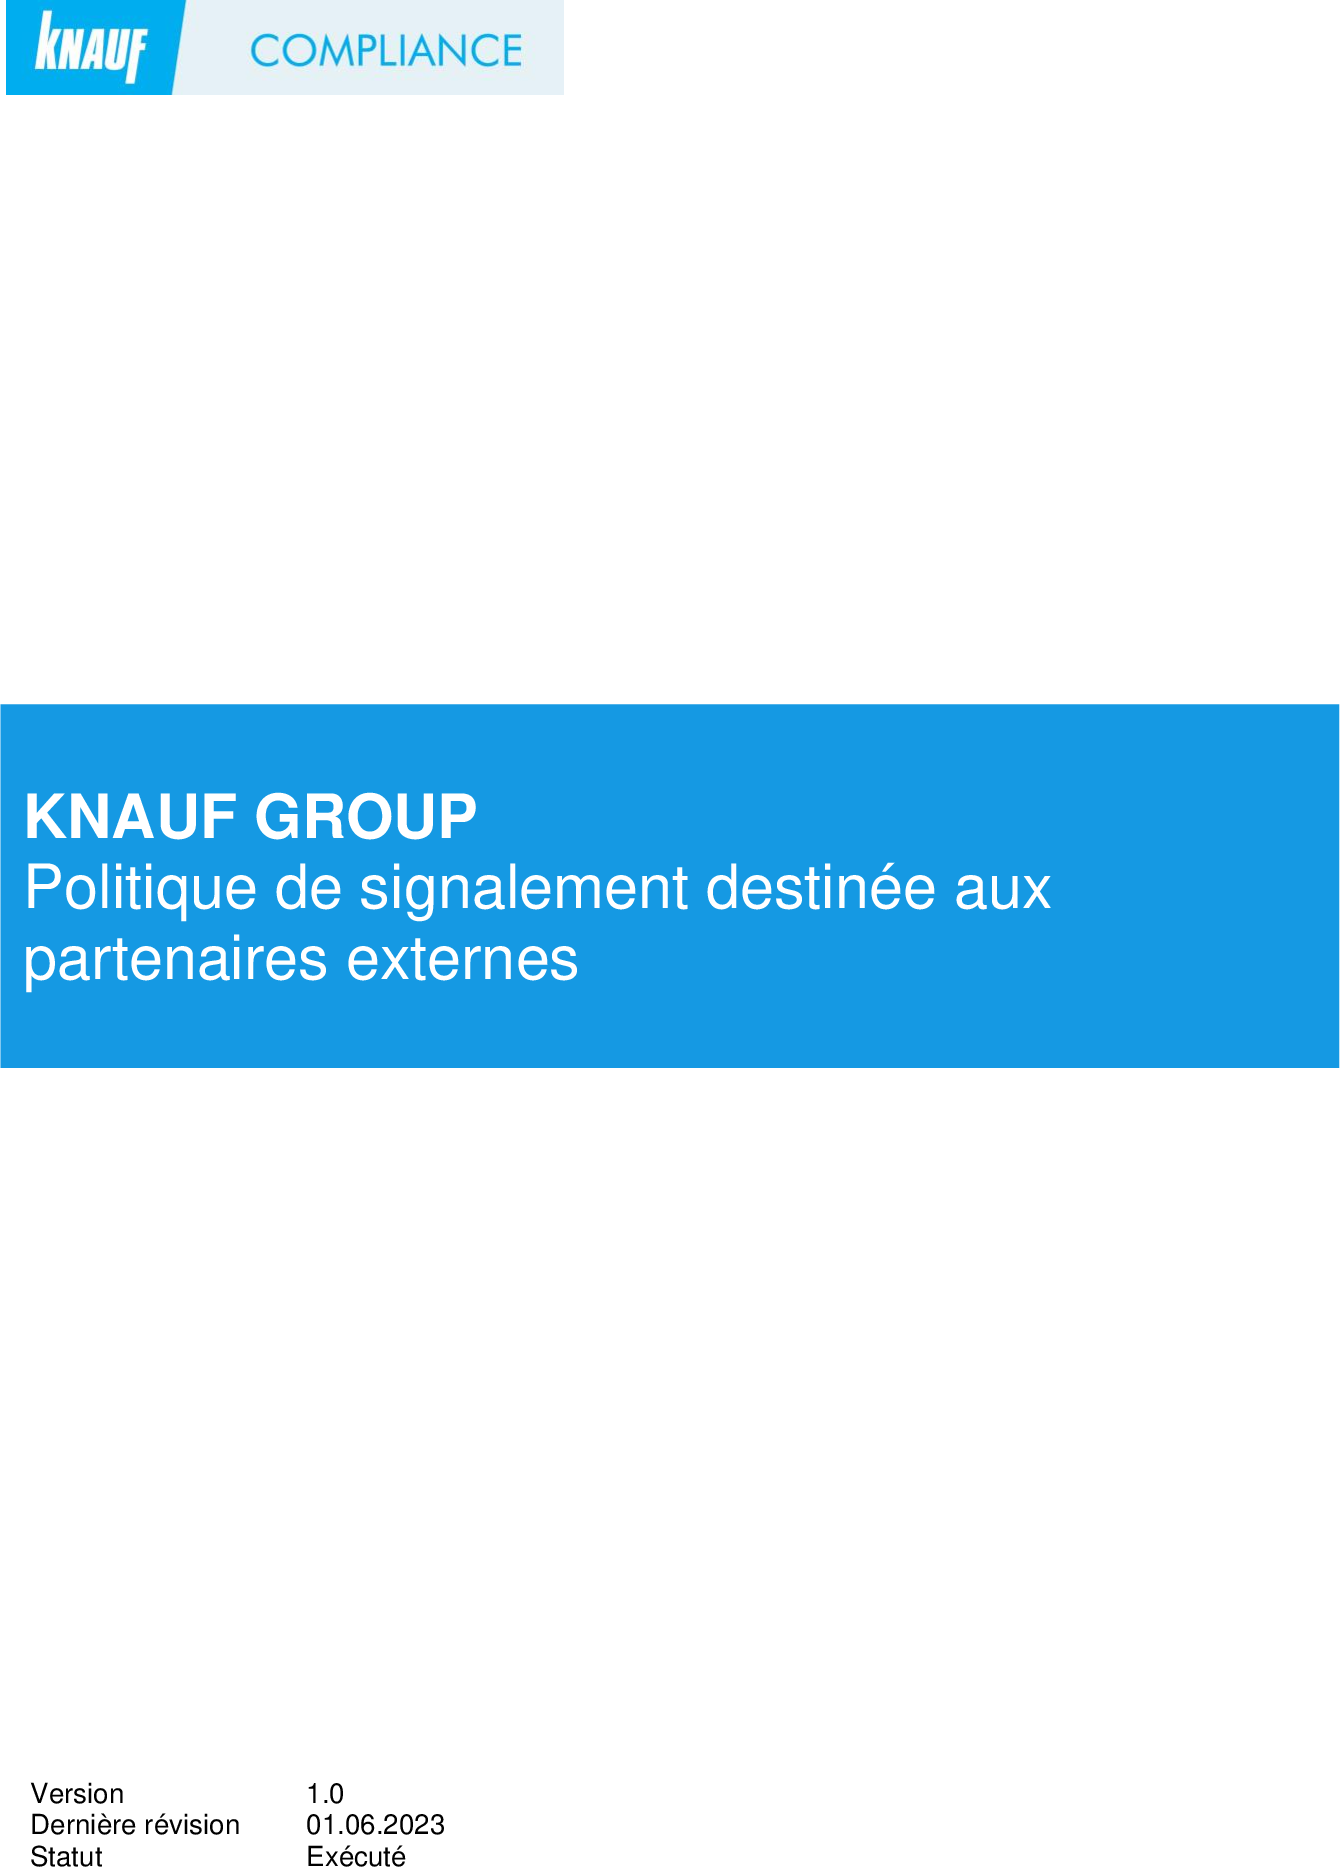 Knauf Group - SpeakUp Policy Externals 2023 FR